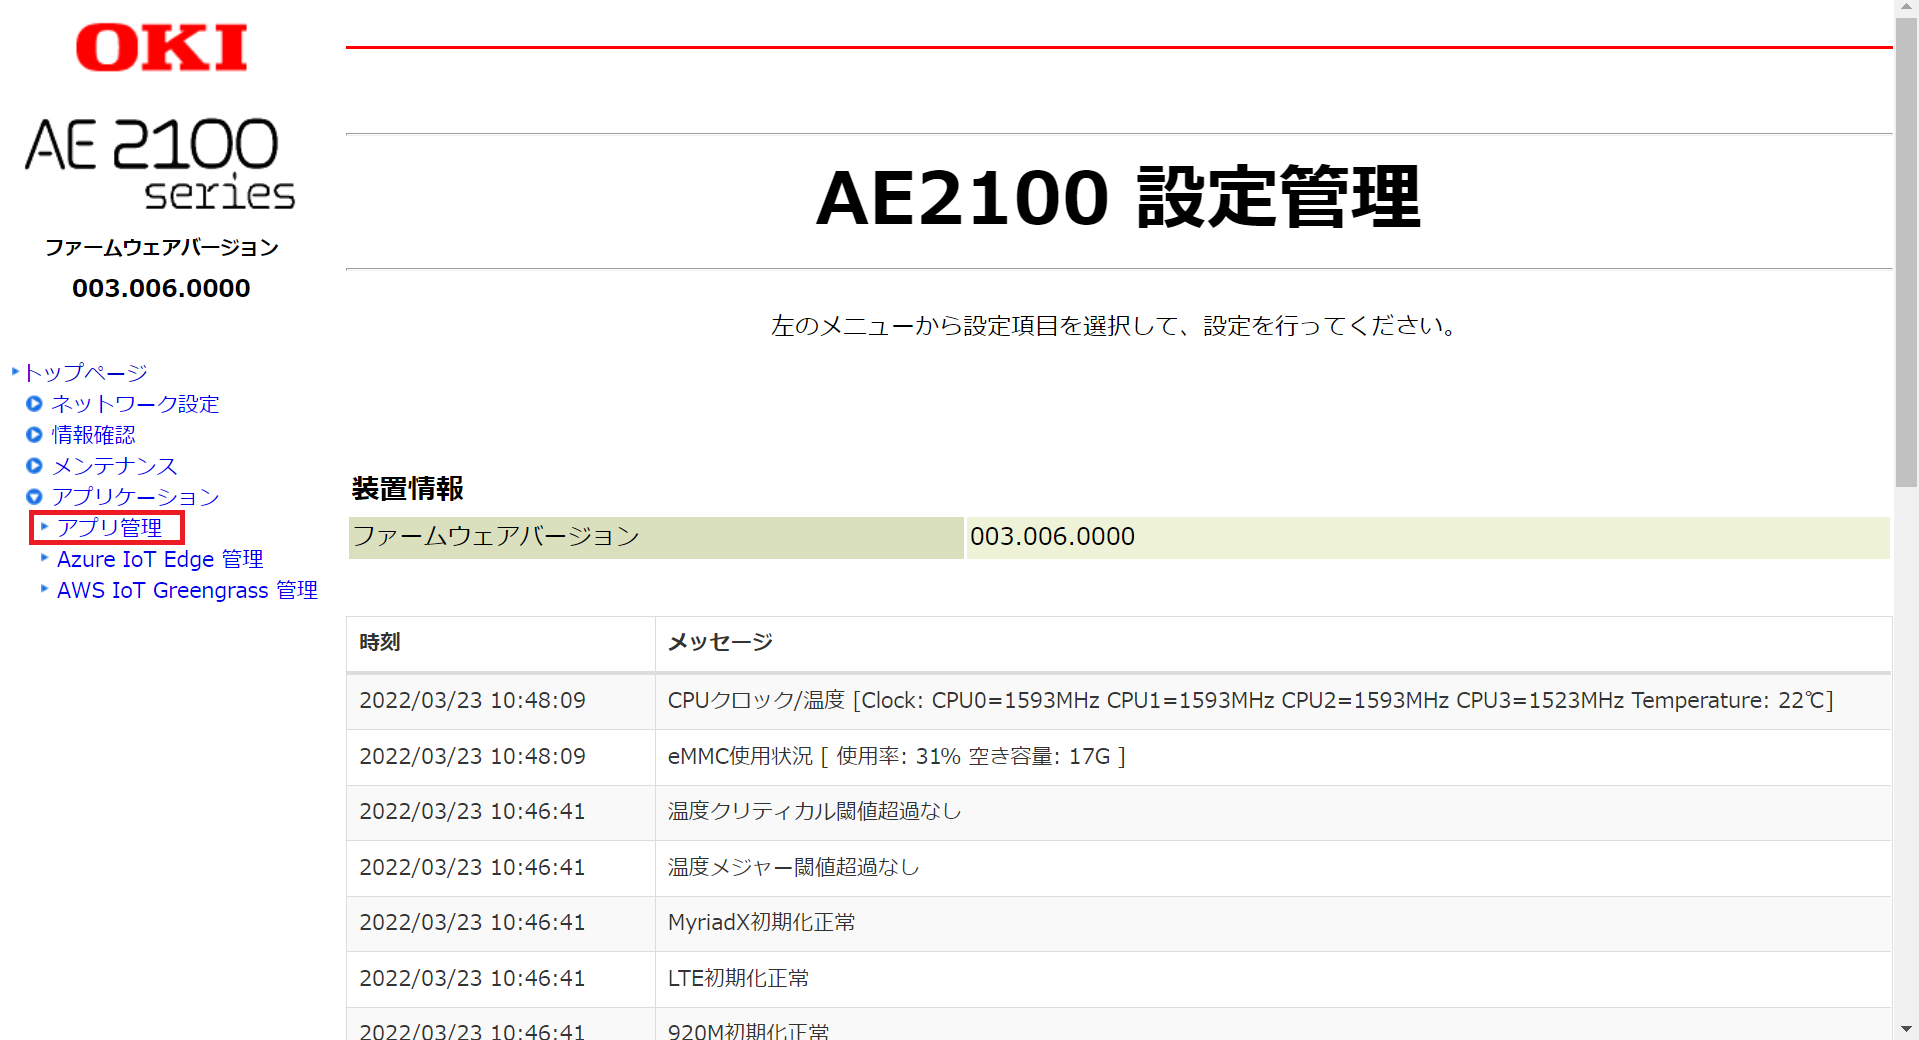 AE2100_Web-UIトップページ.png